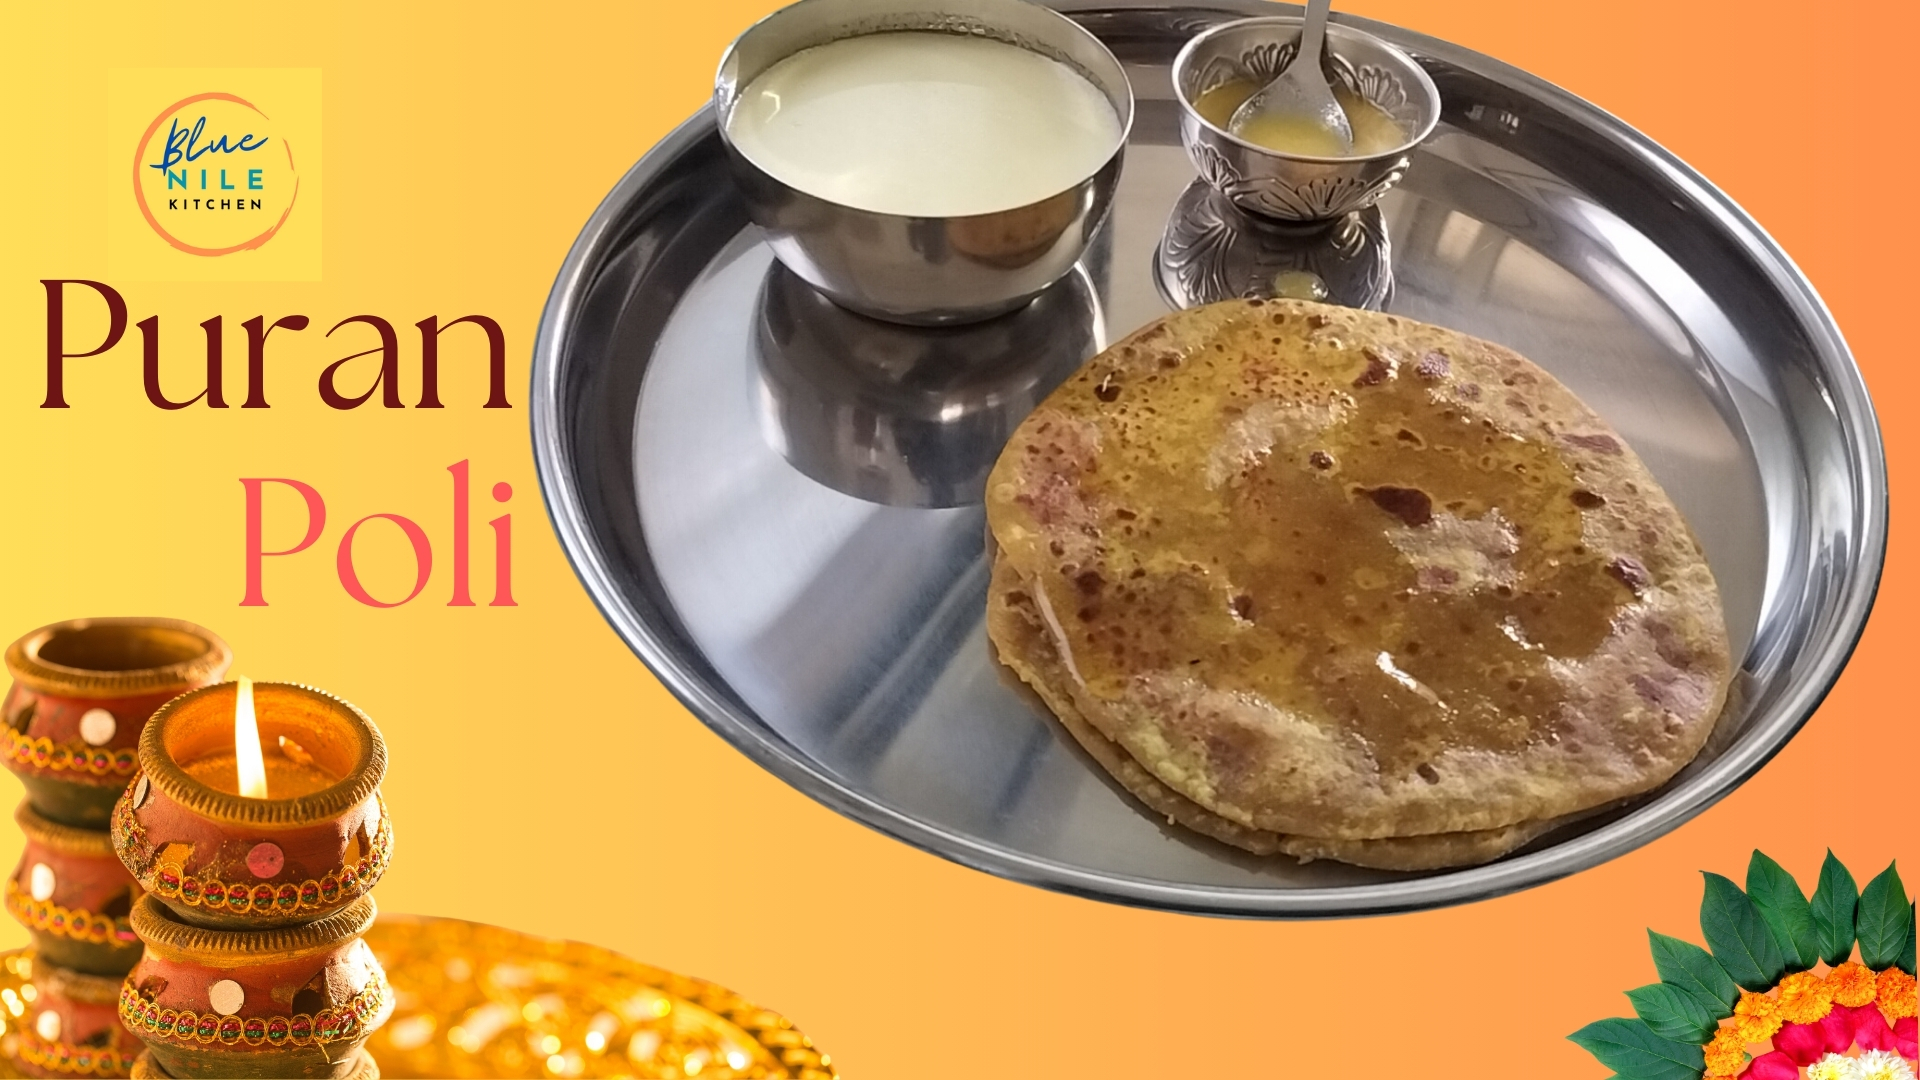 Puran Poli: Authentic Indian Sweet Flatbread Recipe